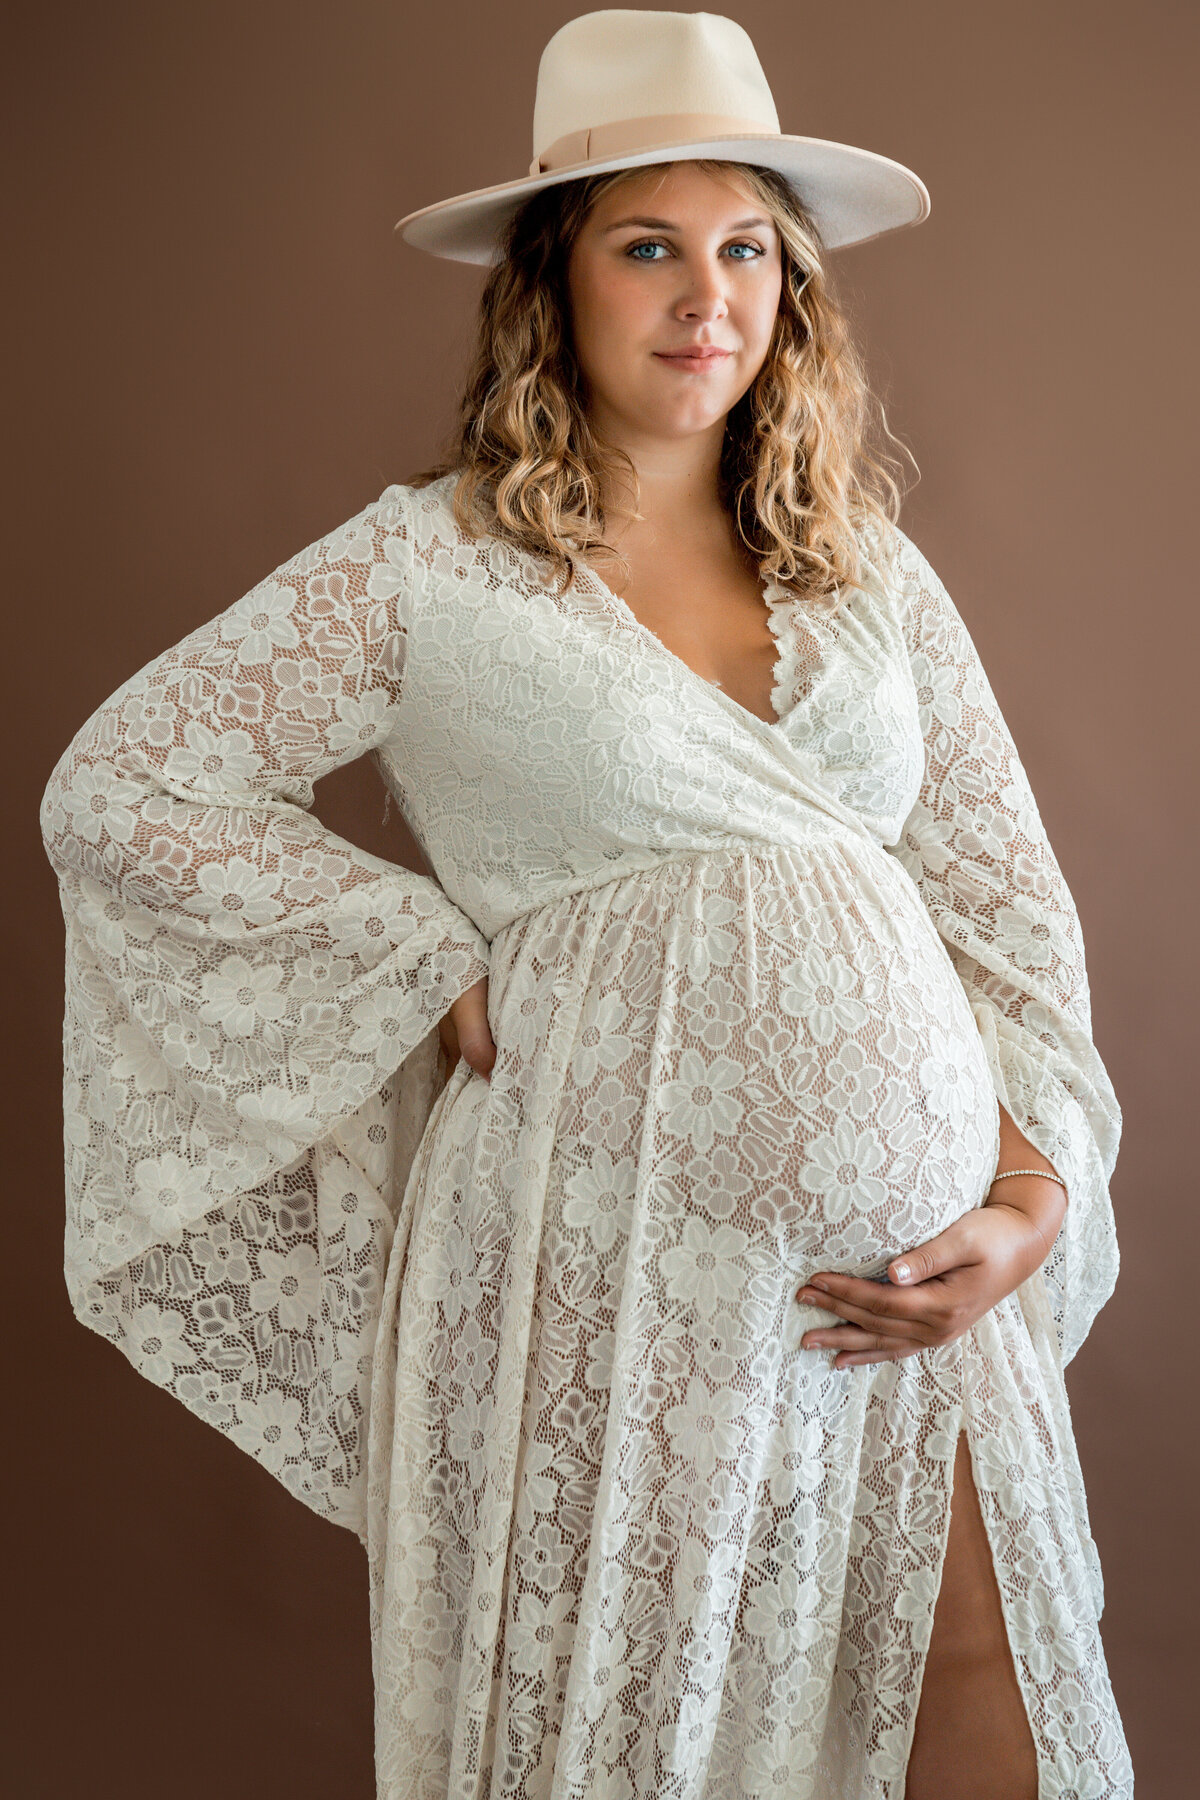 connecticut-maternity-studio-photographer101